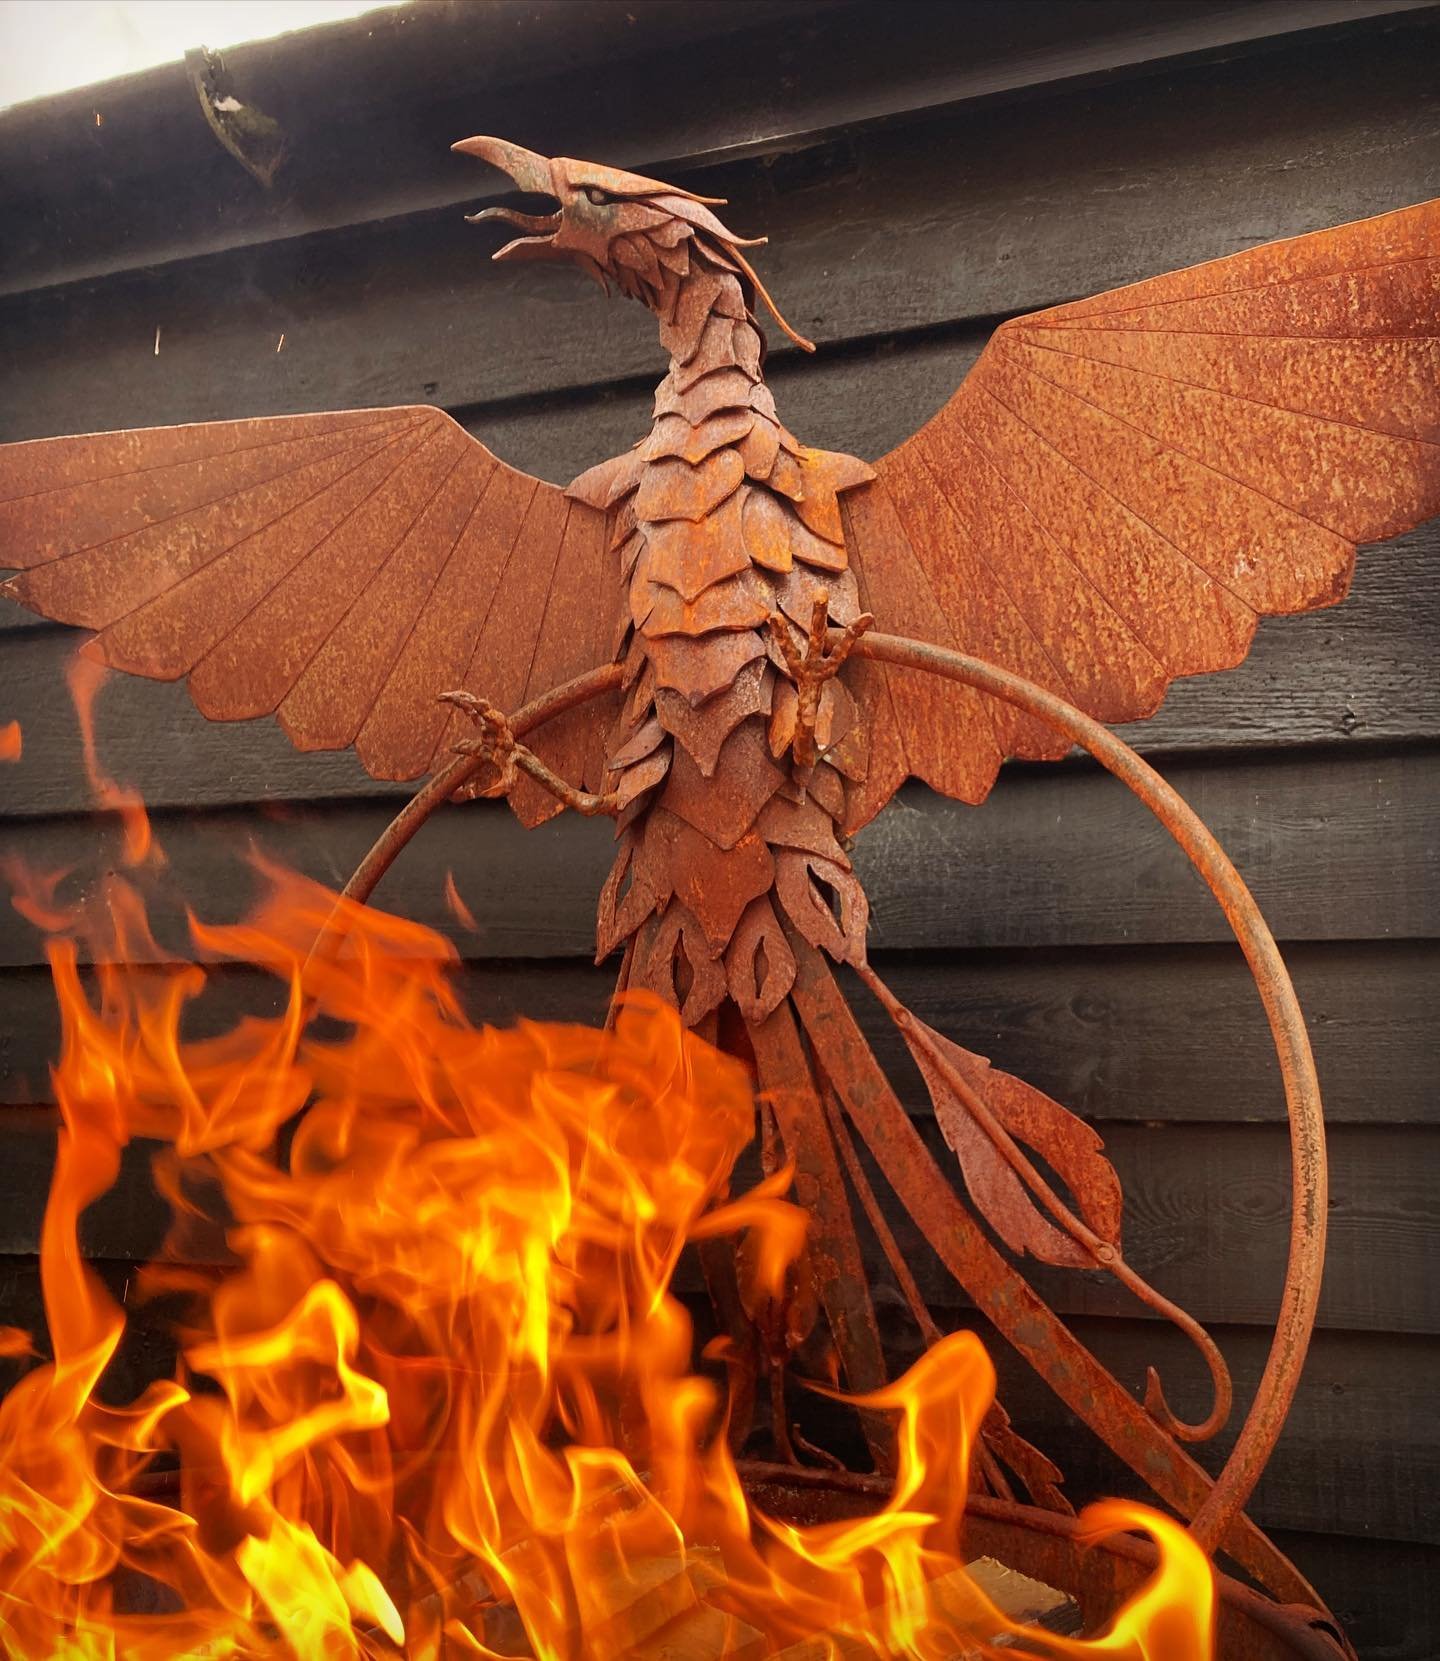 Taking the phoenix to the first show of the year @weirdandwonderfulwood #firepit #firebowl #phoenix #gardensculpture #sculpture #weldedart #artwelding #blacksmith #artistblacksmith #suffolk #madeinsuffolk